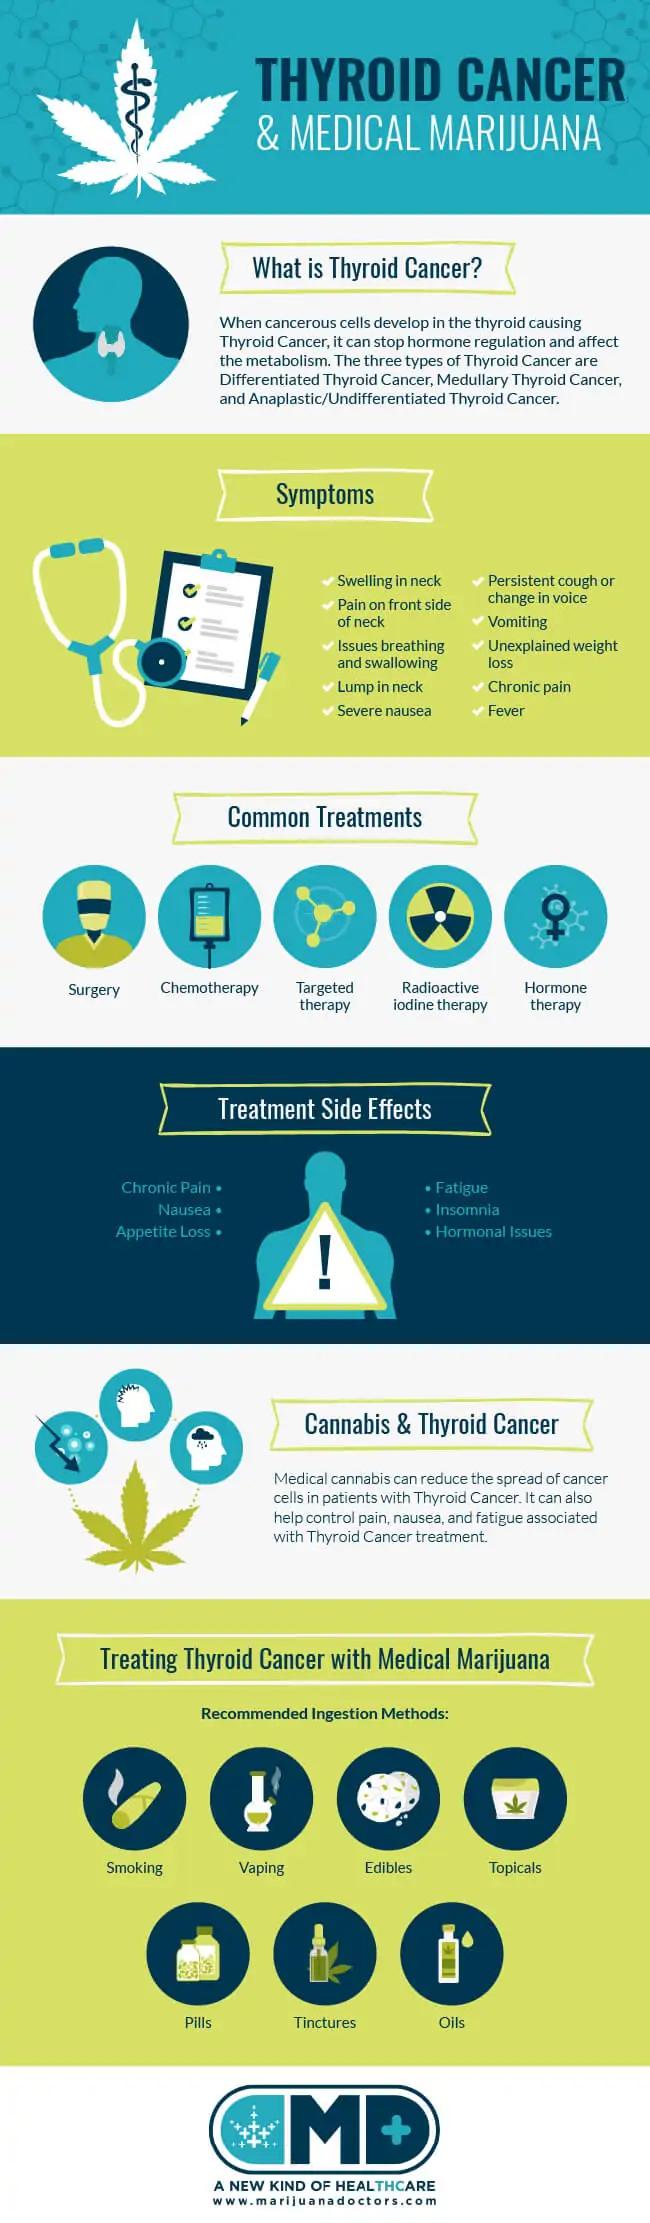 Medical Marijuana and Thyroid Cancer